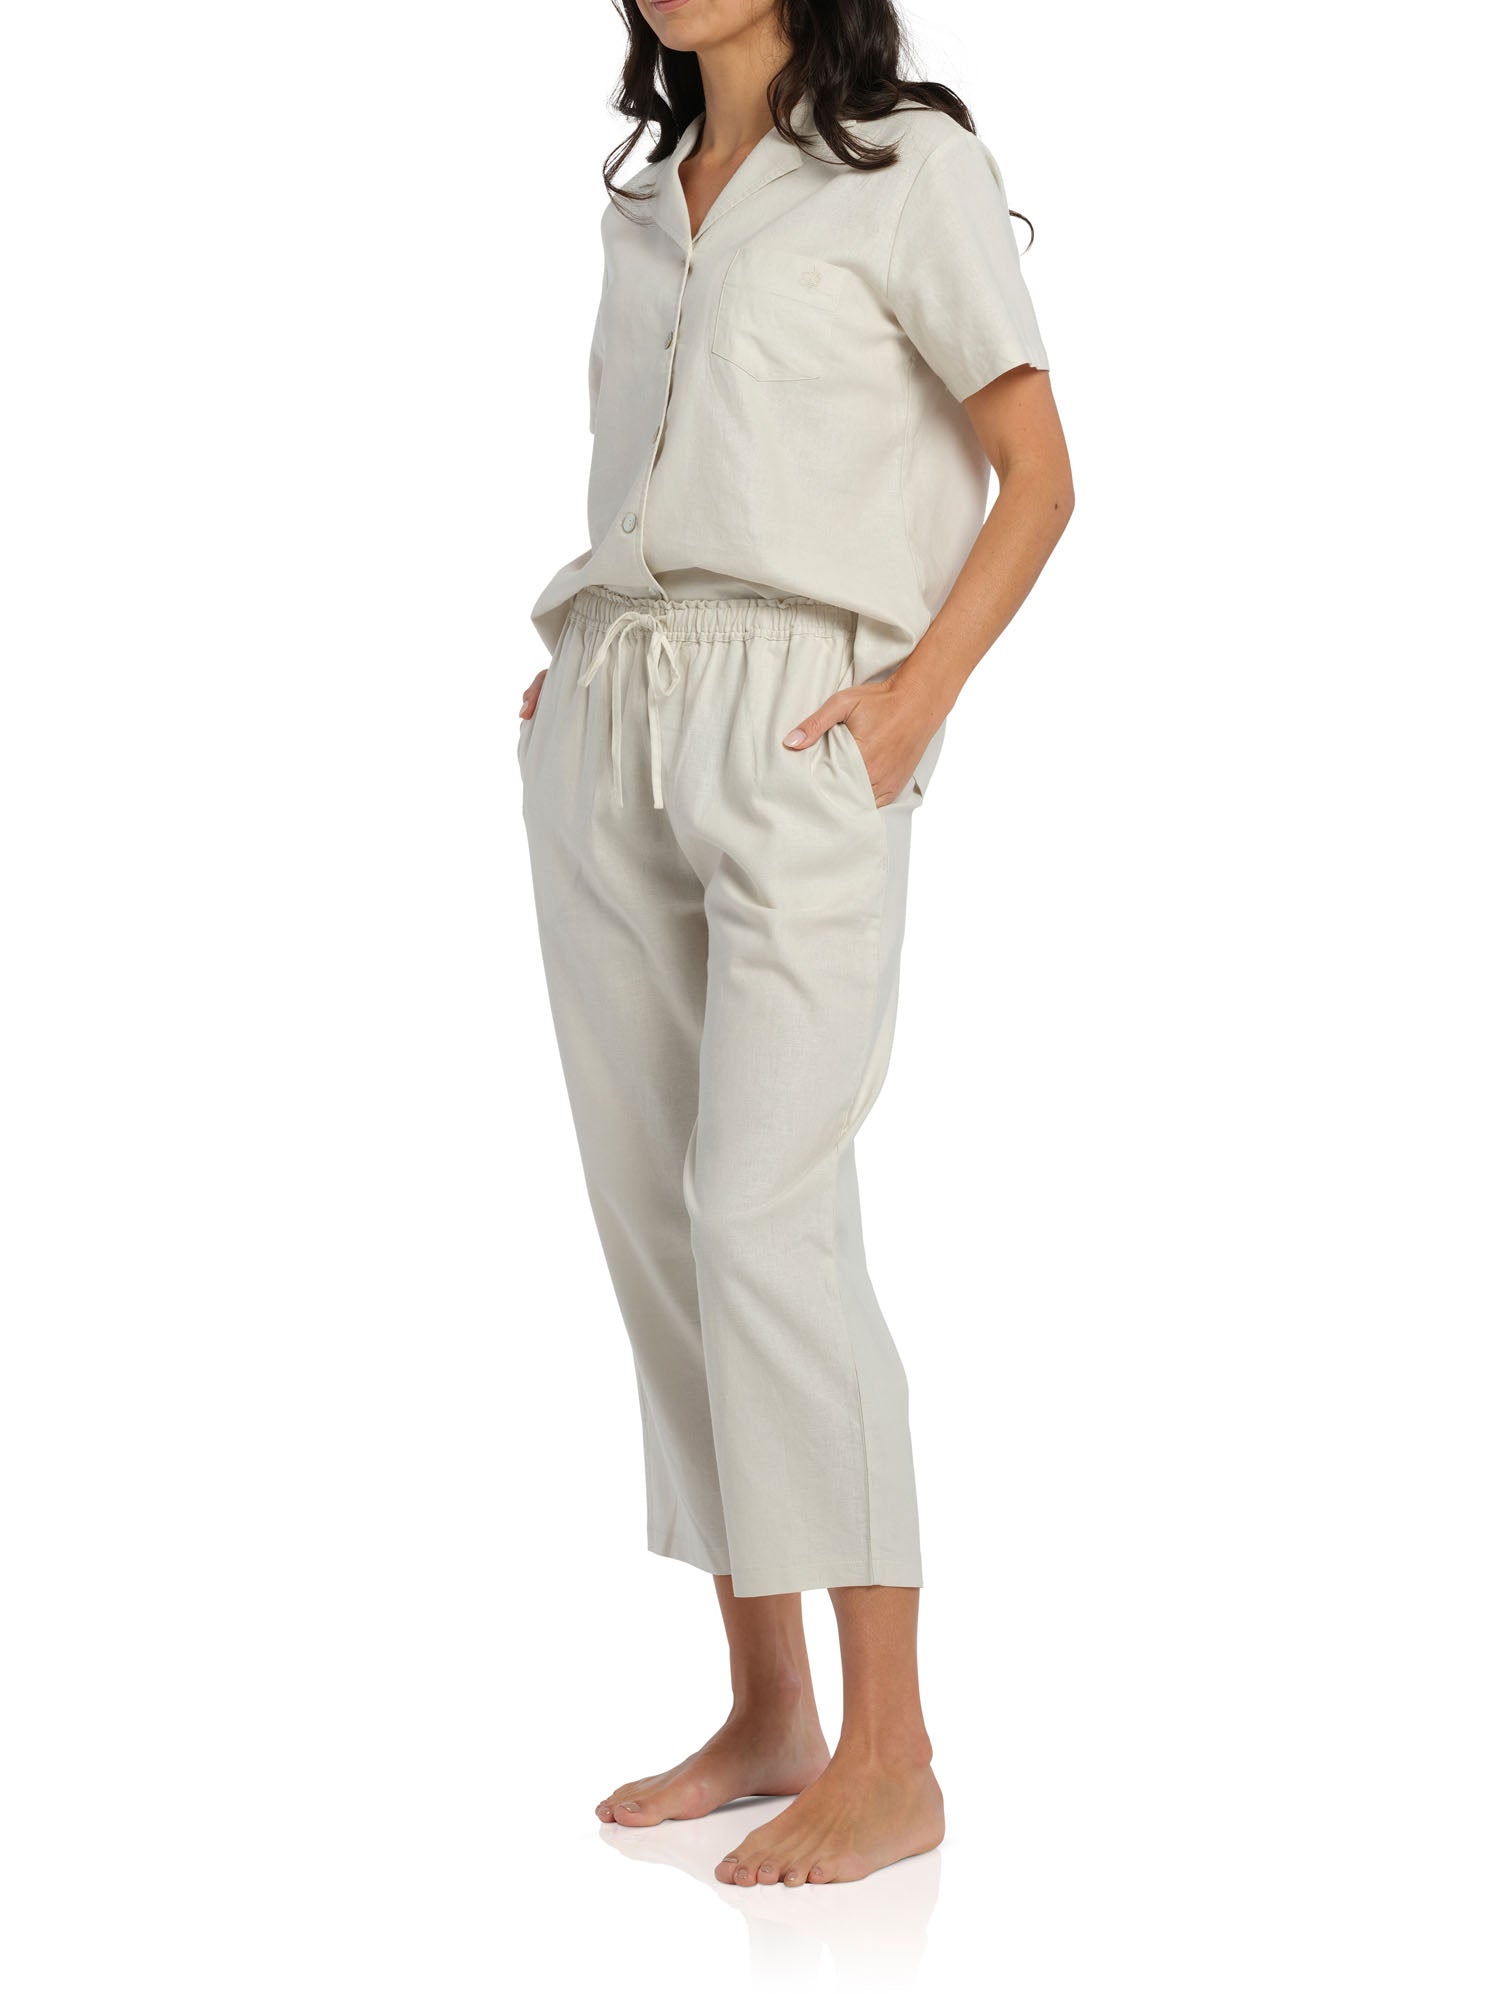 Women's Ivory Summer Dreaming Linen Pyjama Set with 7/8 Pant | Magnolia Lounge Sleepwear Australia